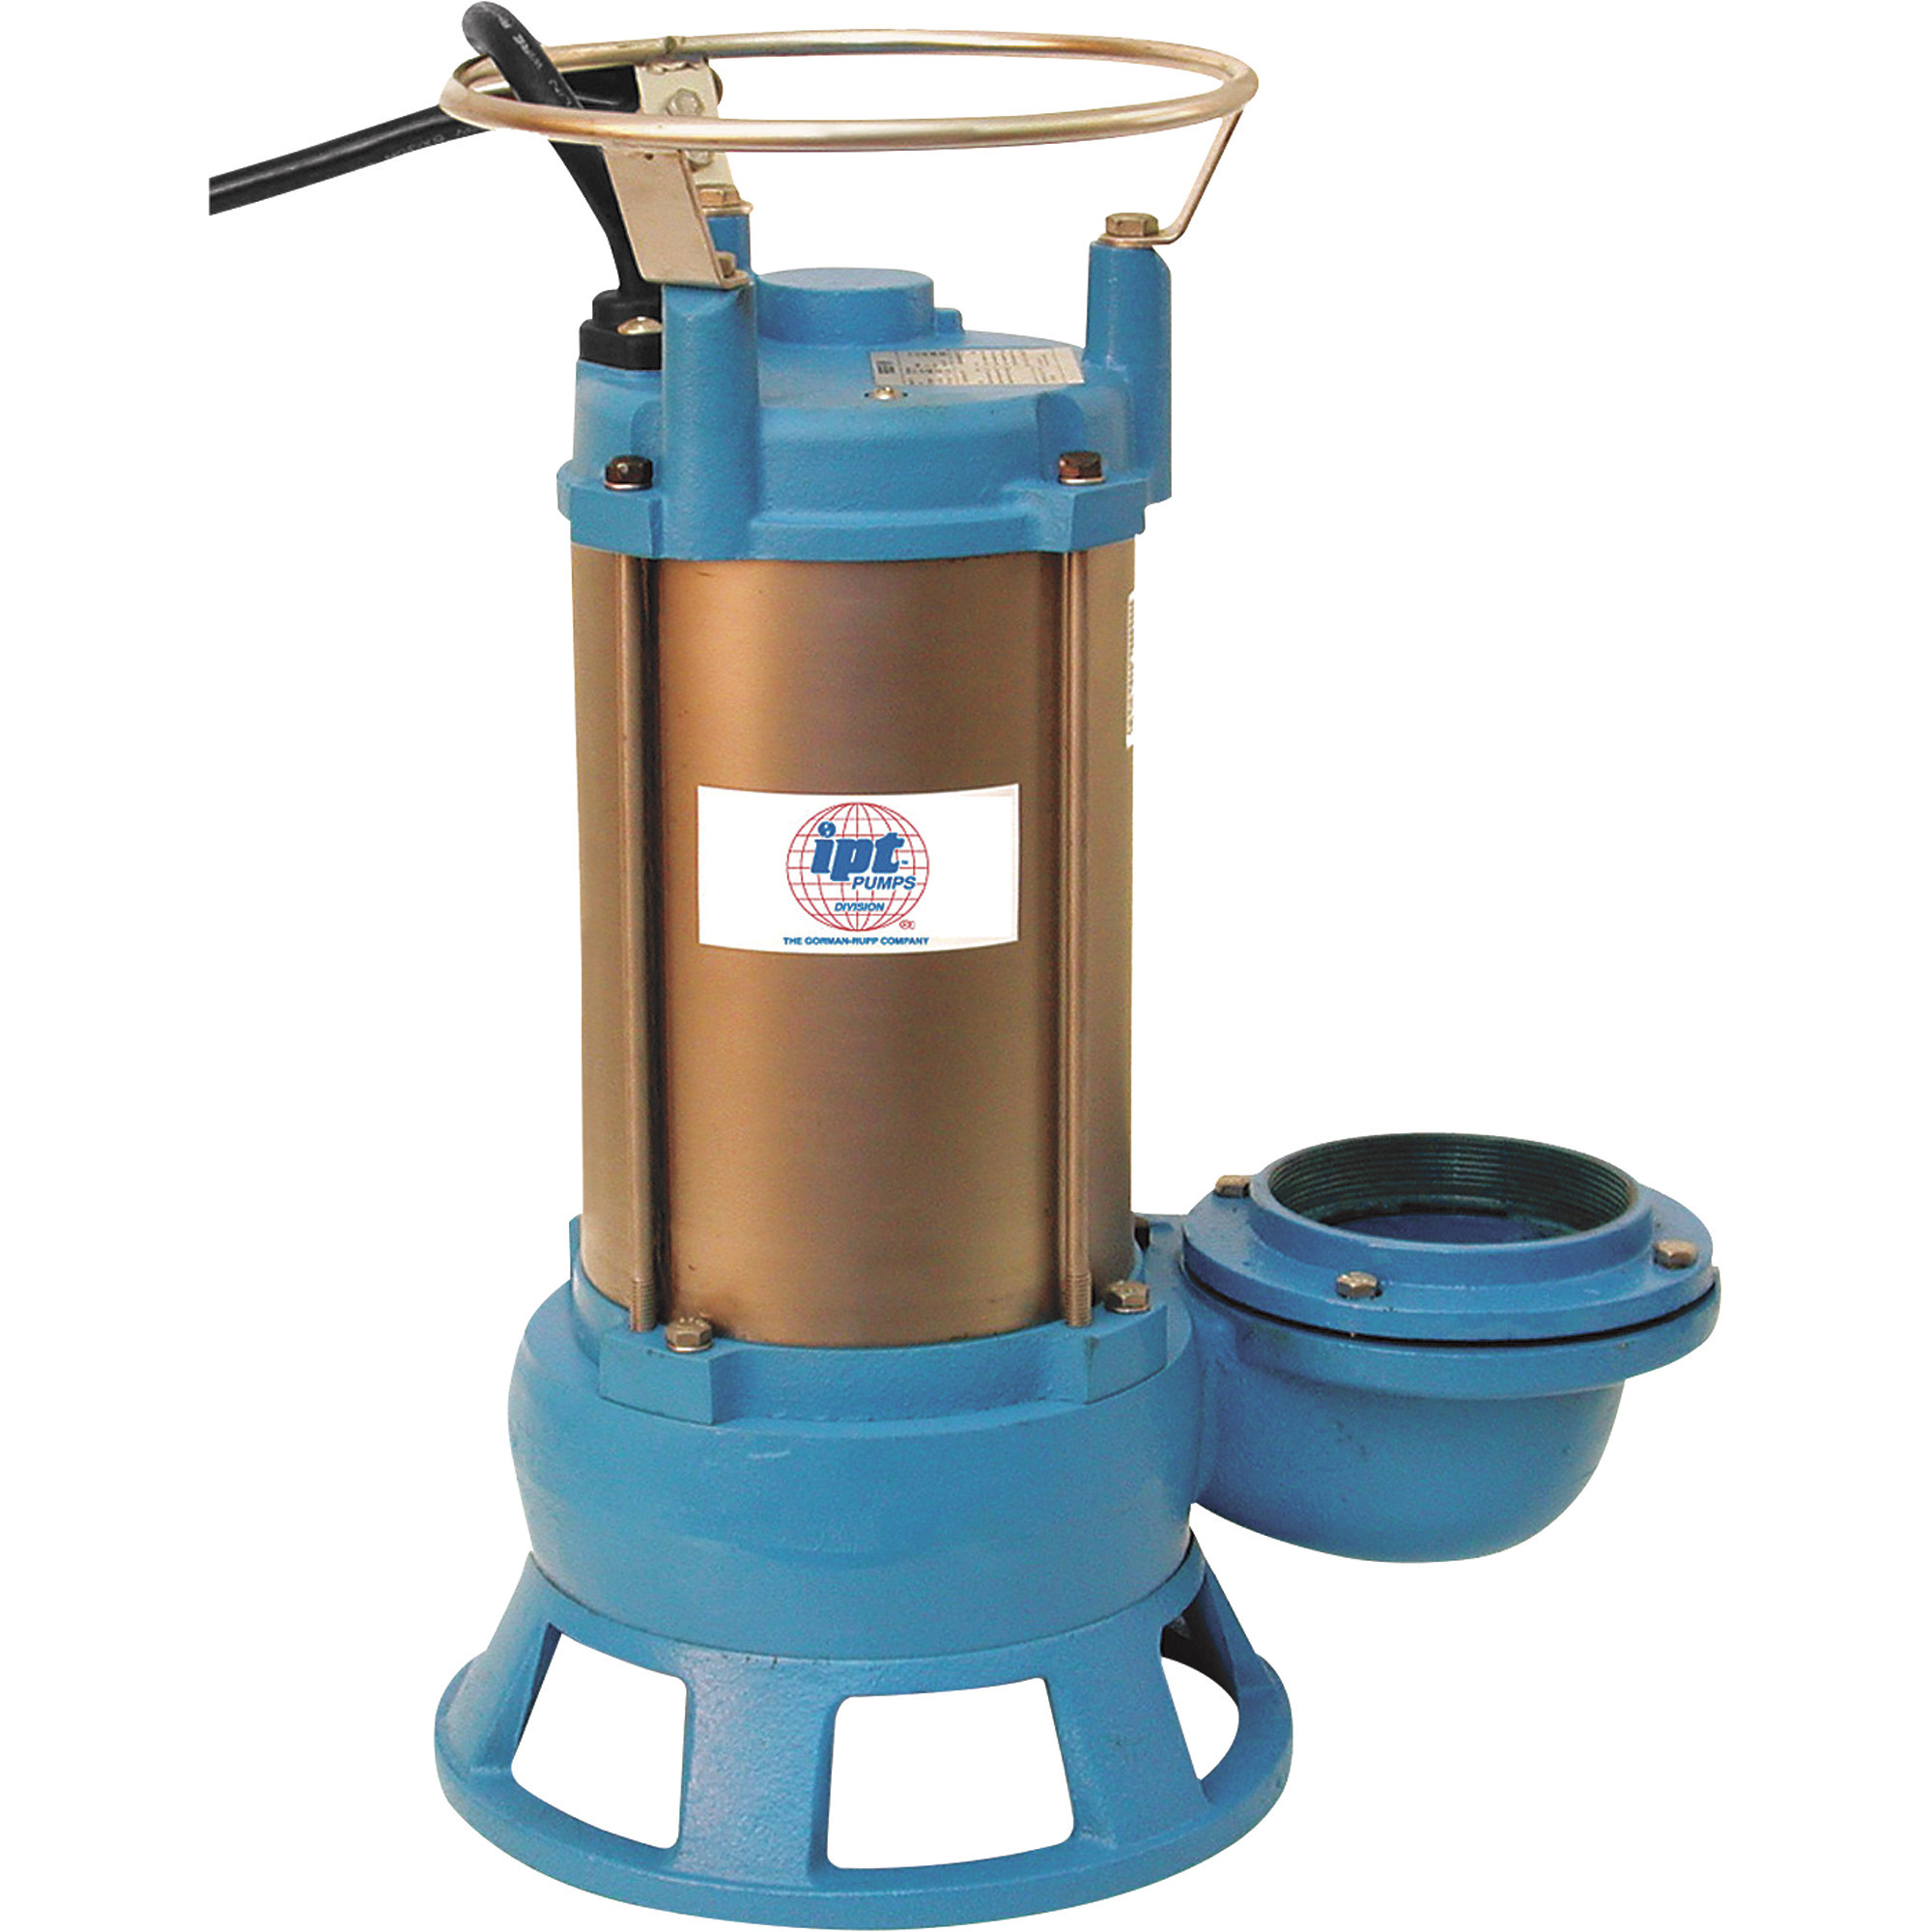 IPT Centrifugal Submersible Shredder Sewage Water Pump â 12,600 GPH, 2 HP, 3Inch Ports, Model 5763-IPT-95